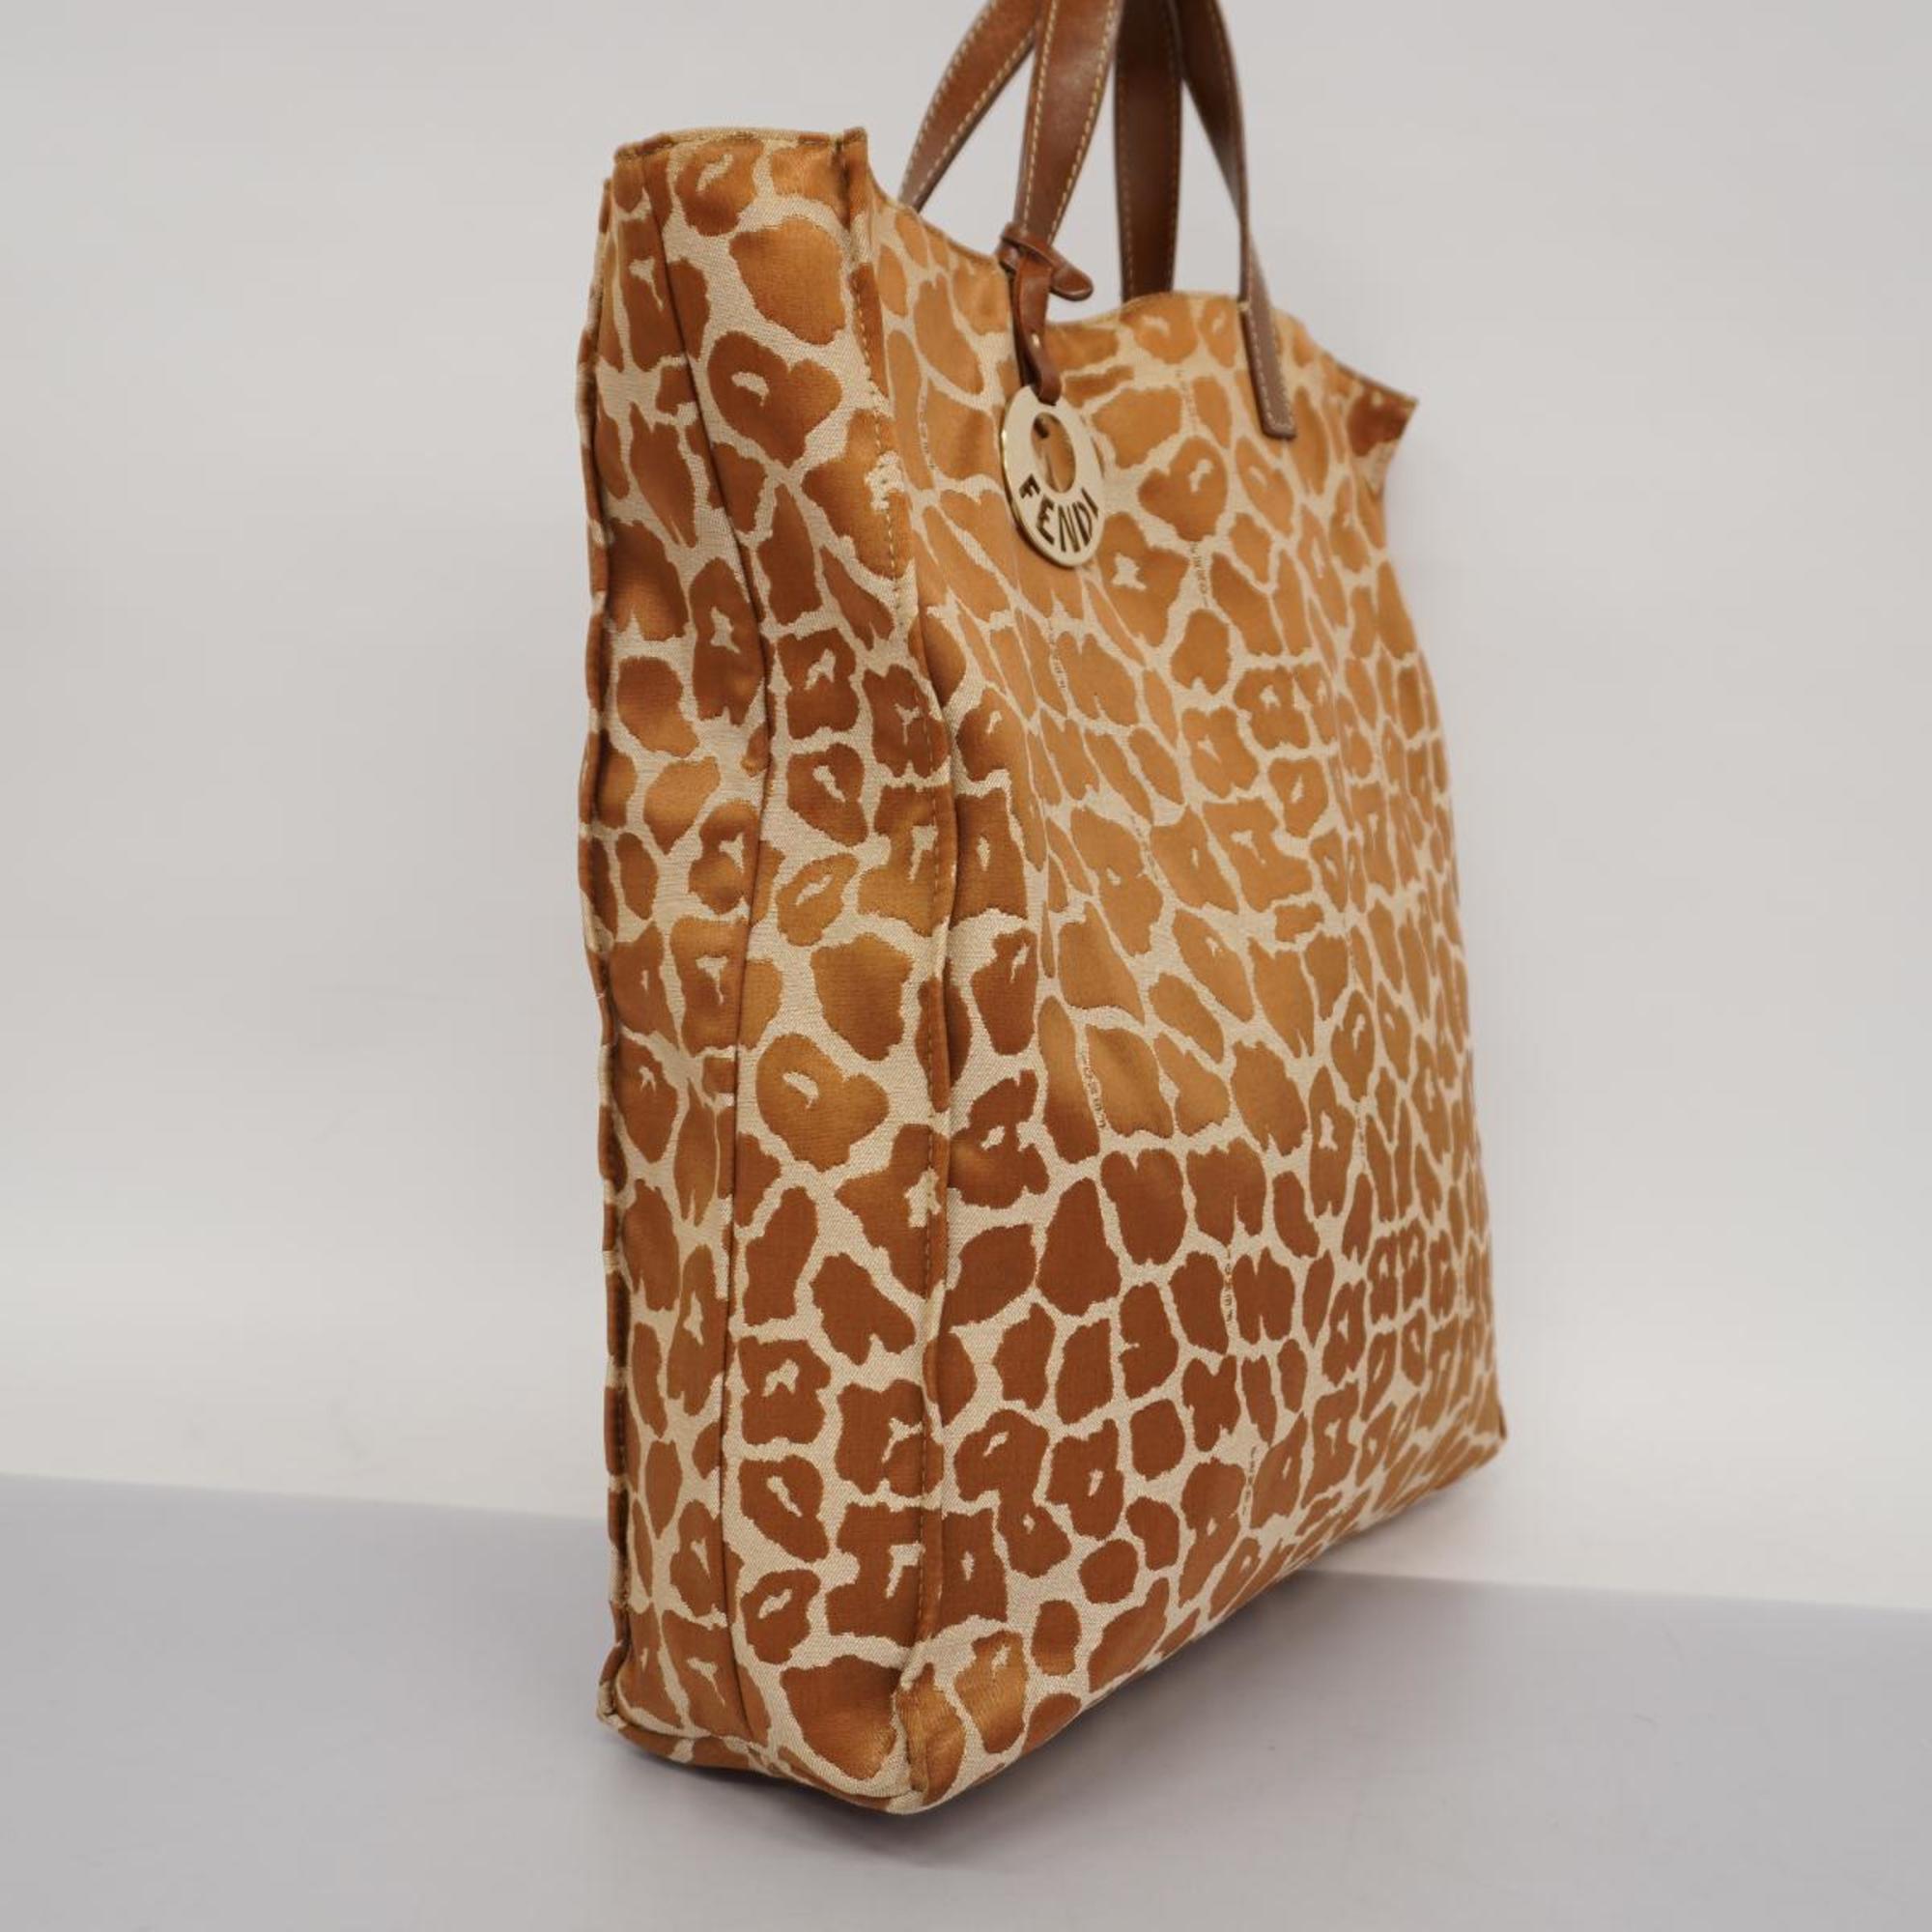 Fendi Tote Bag Nylon Canvas Brown Beige Leopard Print Champagne Women's